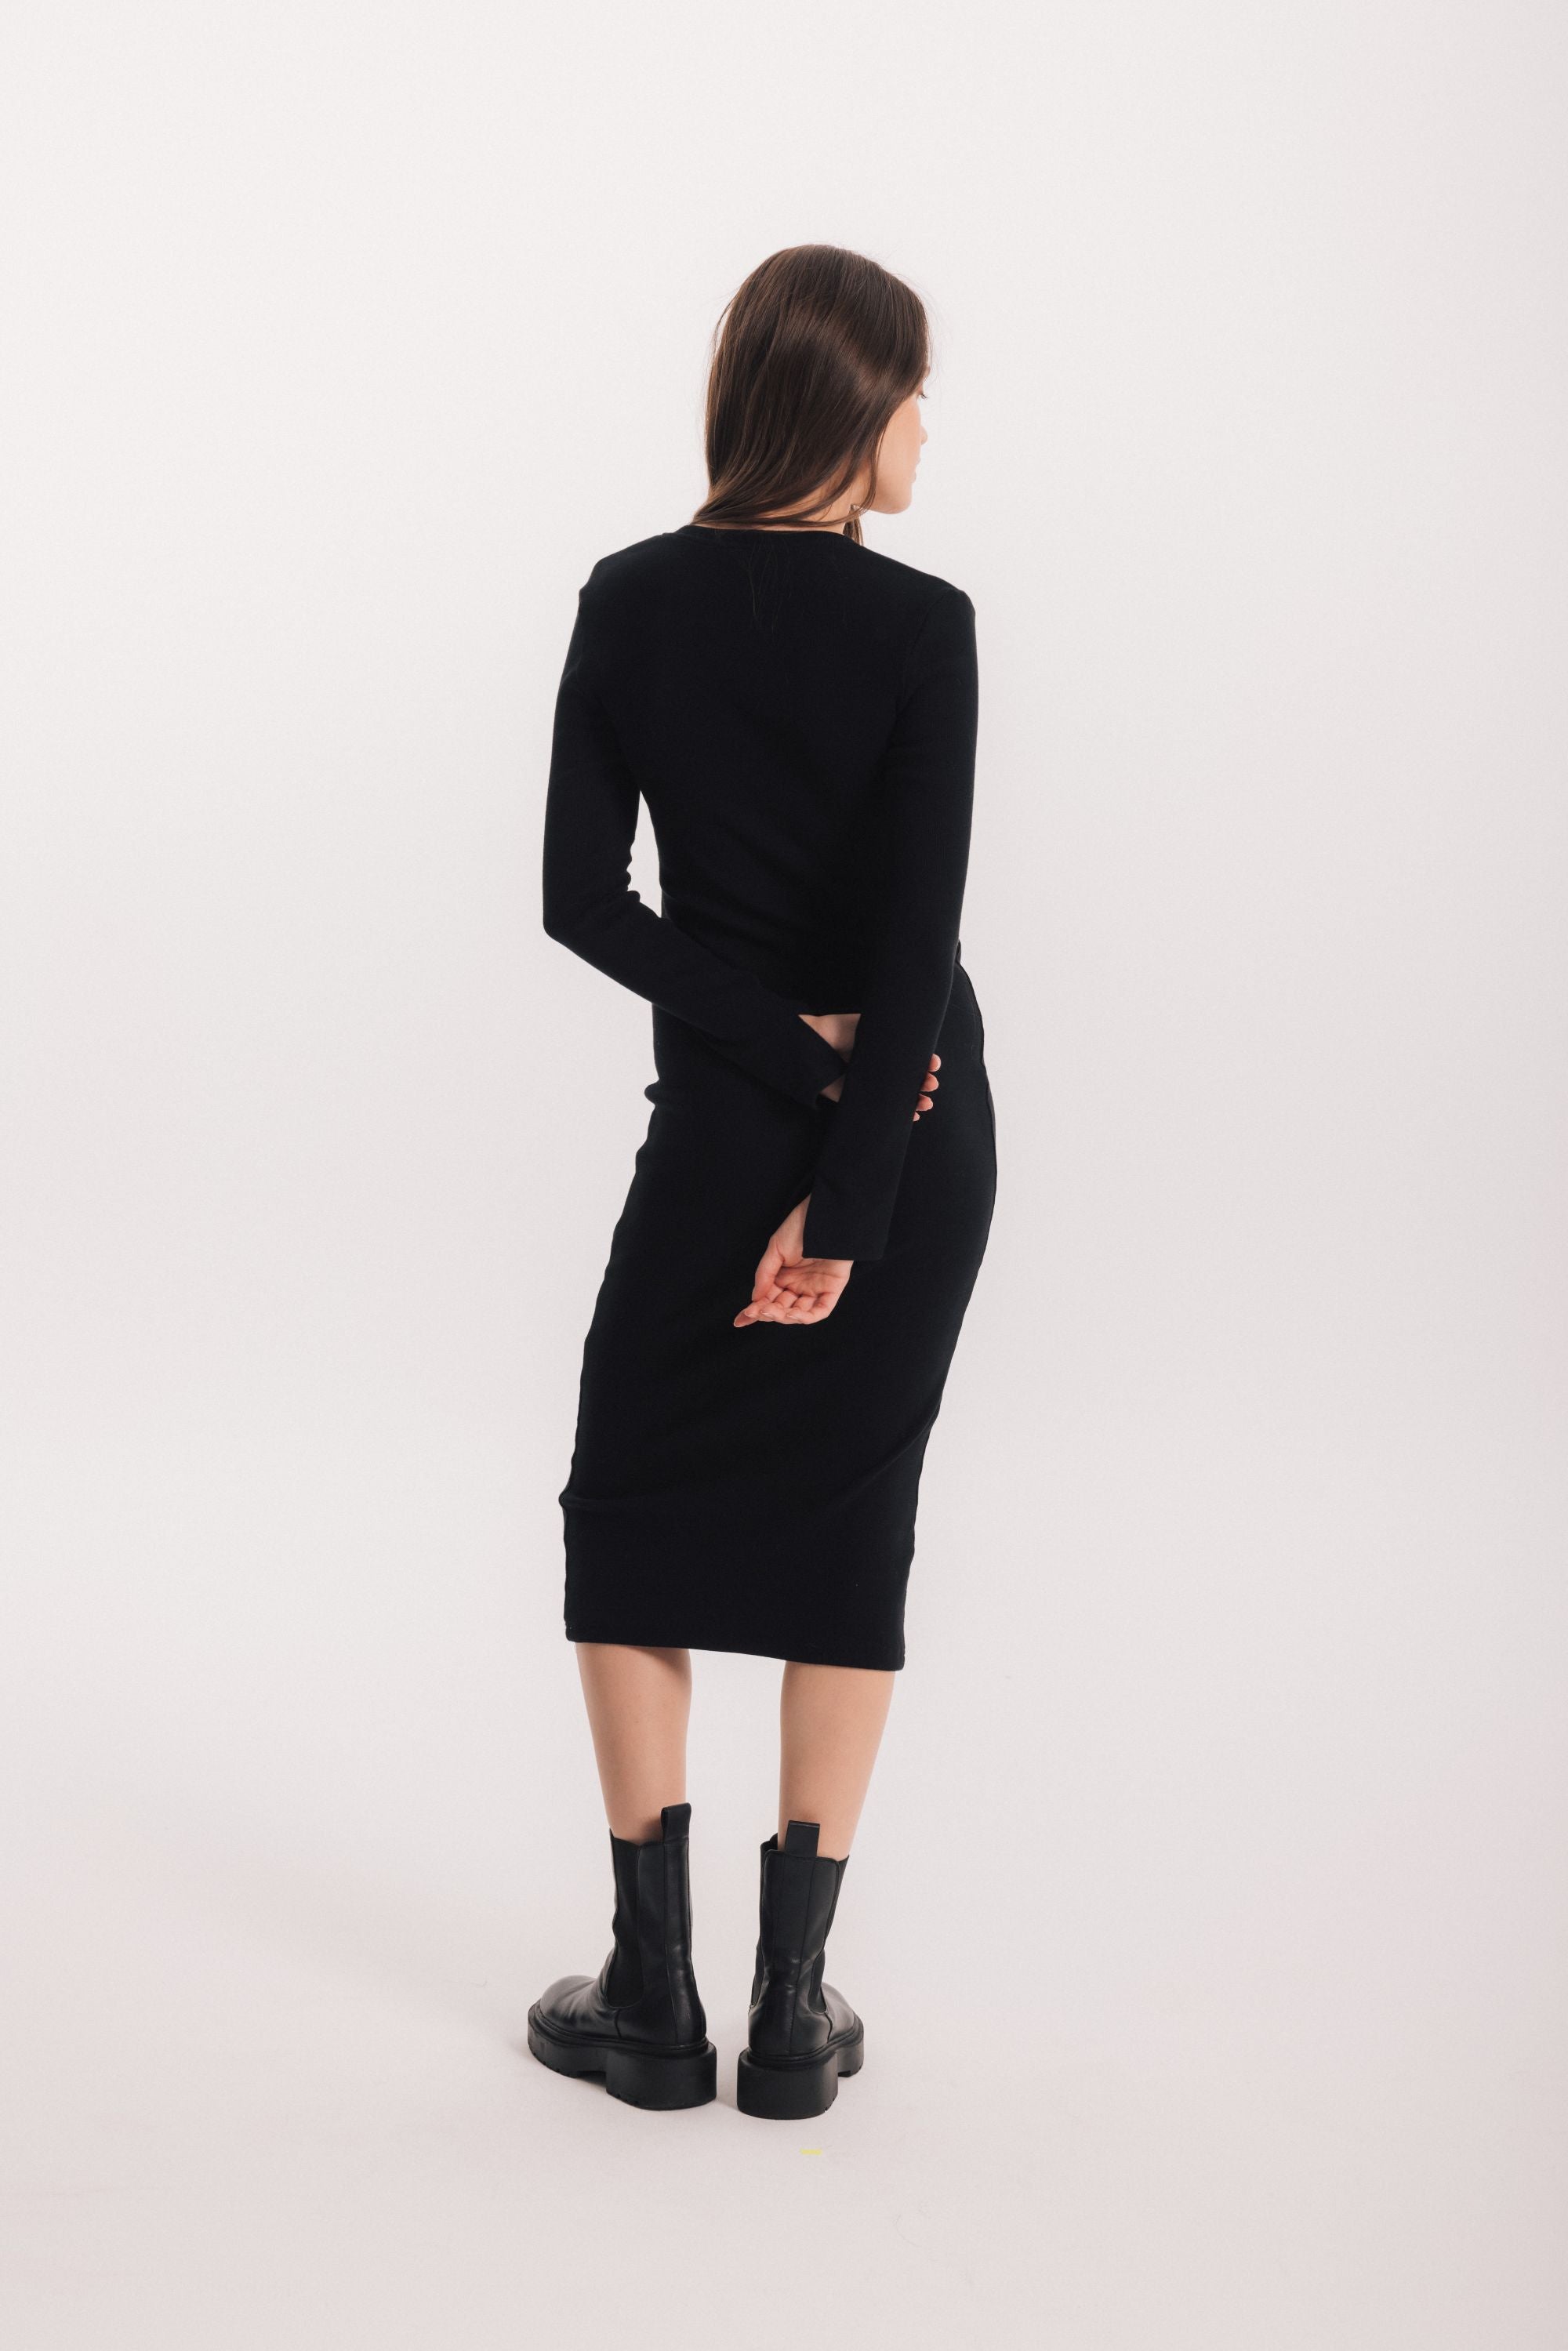 Lara Black dress